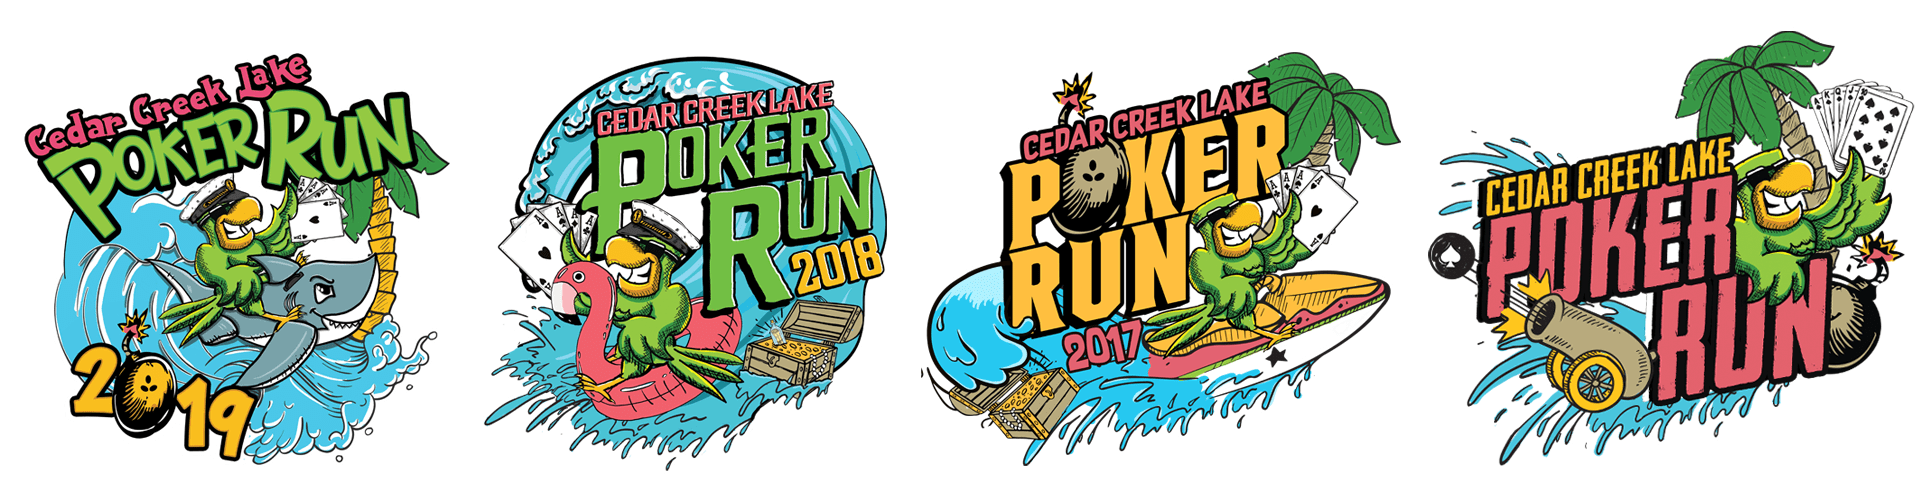 Poker Run Logos